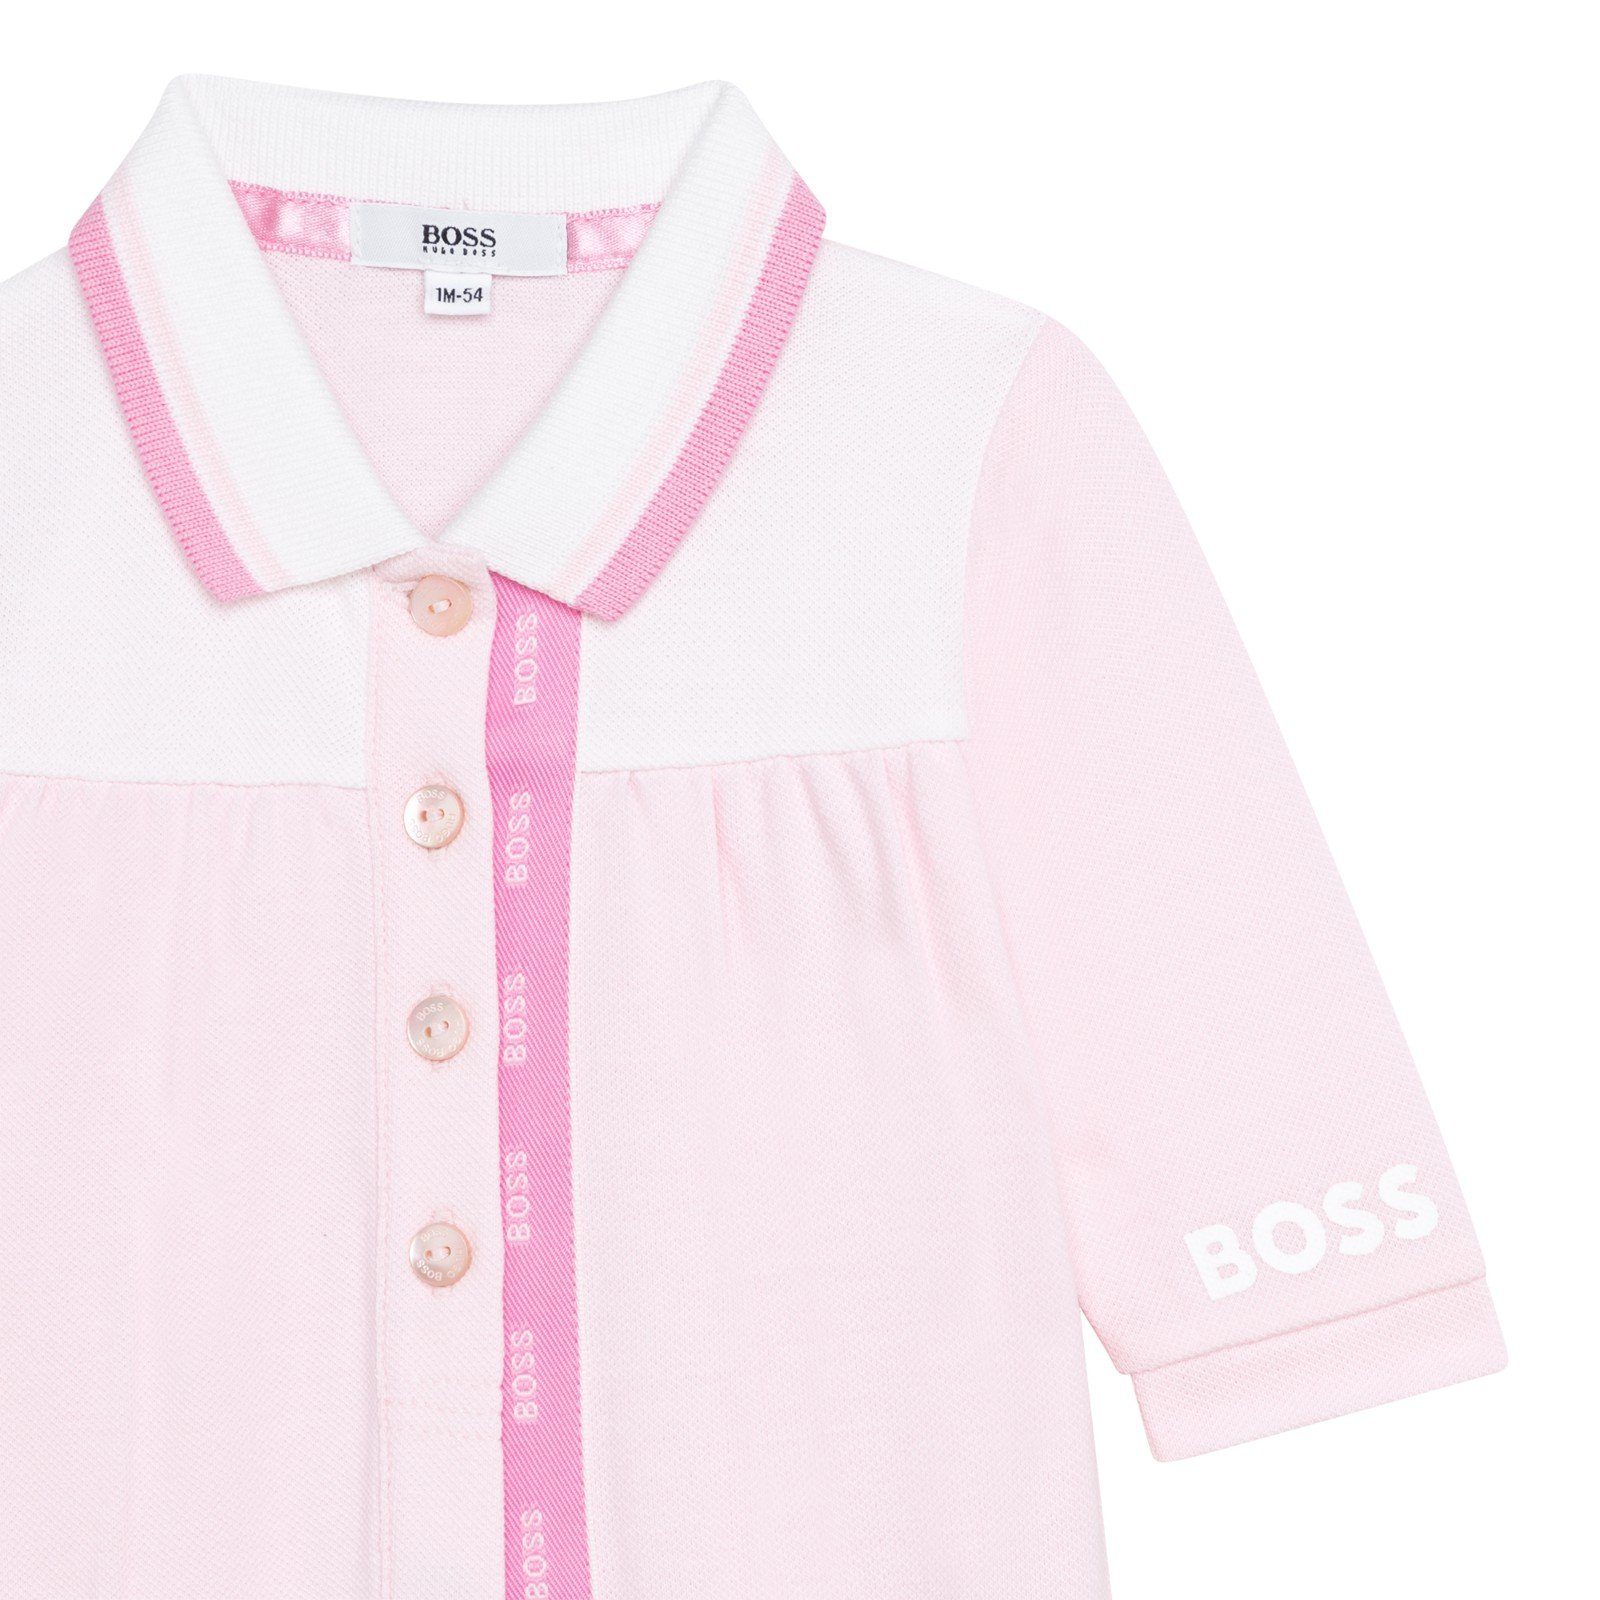 HUGO BOSS BOSS Details Pyjama Strampler Baby Hase Logo mit rosa Strampler